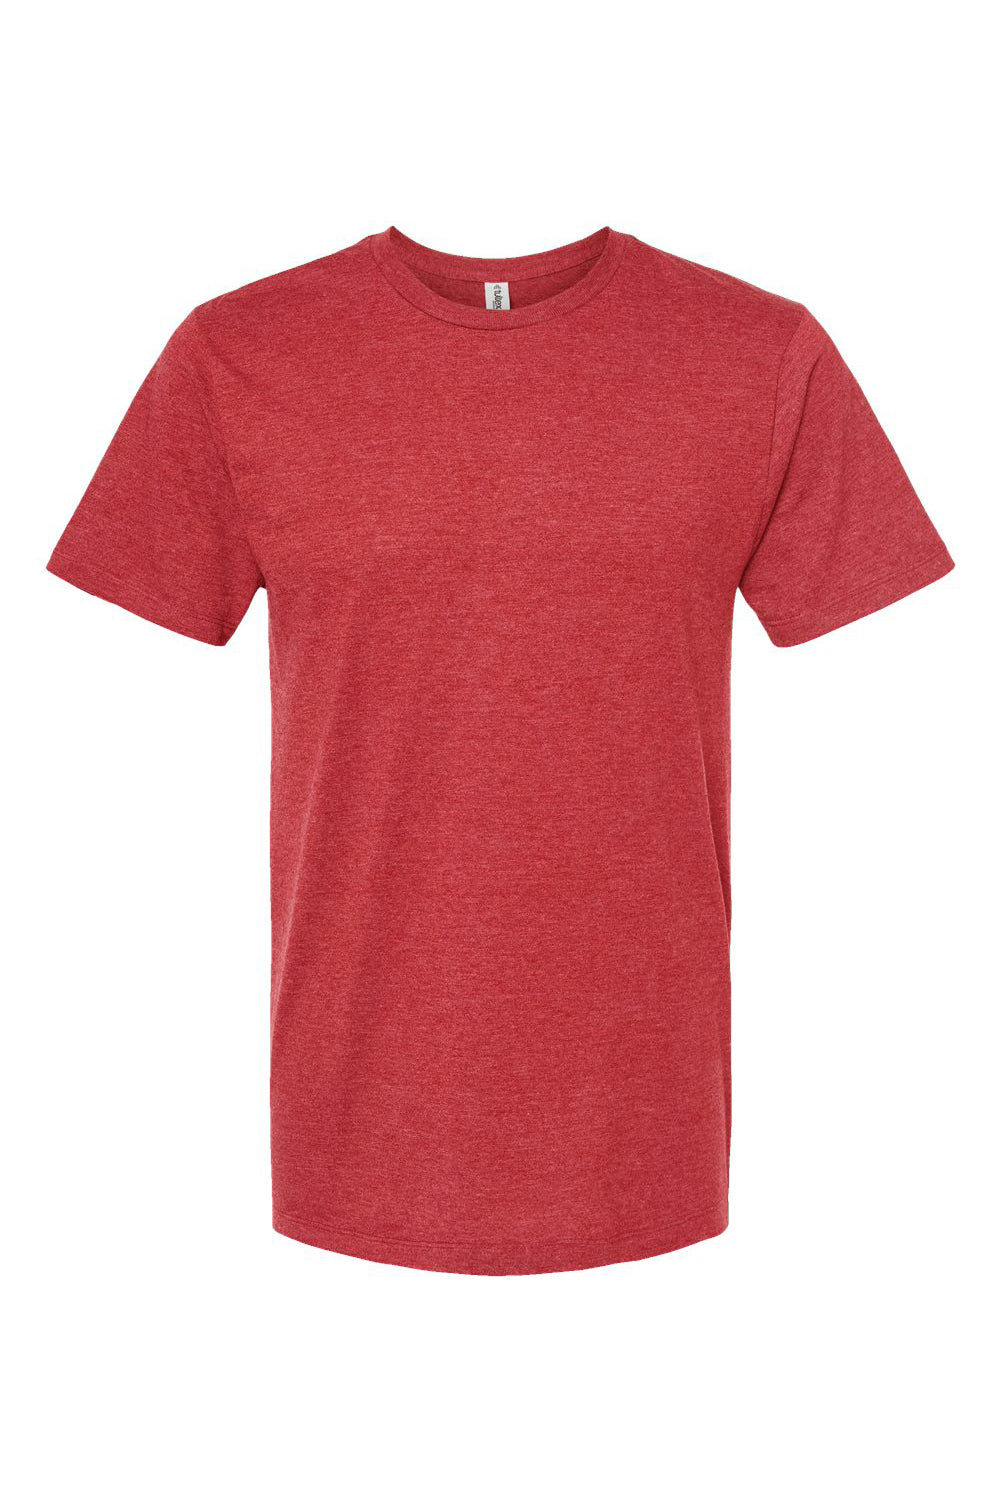 Tultex 541 Mens Premium Short Sleeve Crewneck T-Shirt Heather Red Flat Front